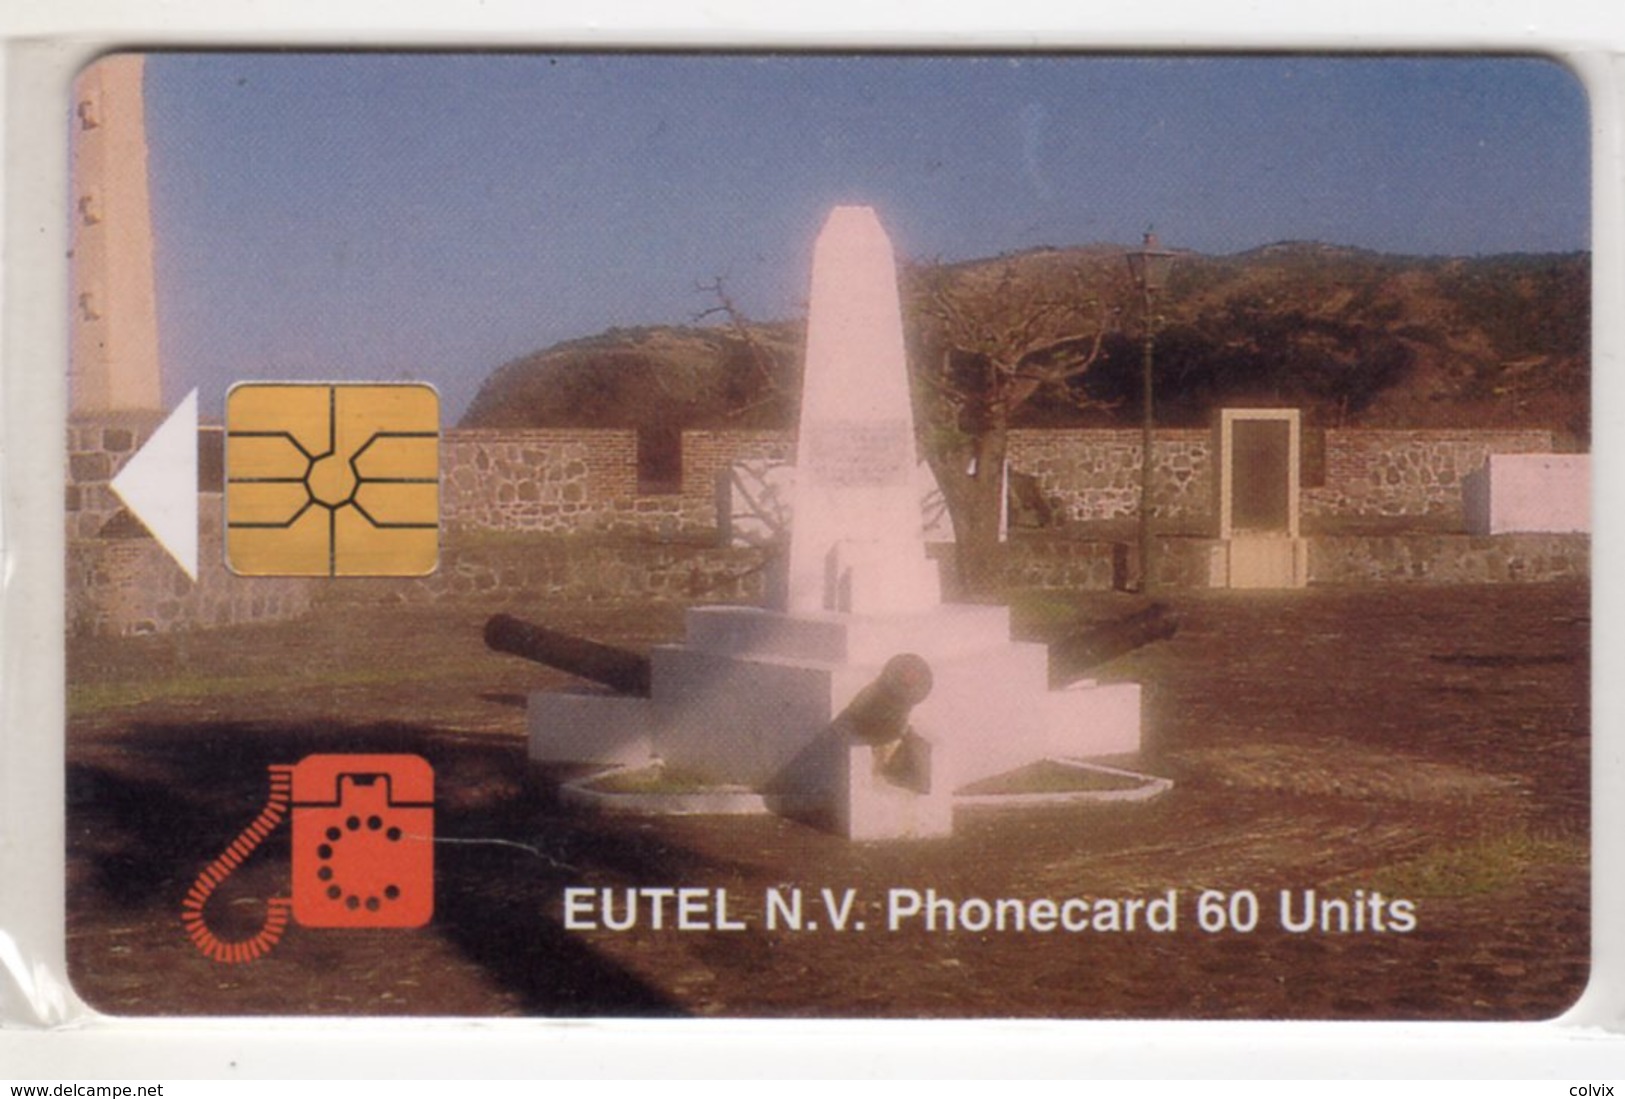 ANTILLES NEERLANDAISES SAINT EUSTACHE REF MV CARDS STAT-C1  ORANGE FORT 2000 Ex - Antilles (Neérlandaises)